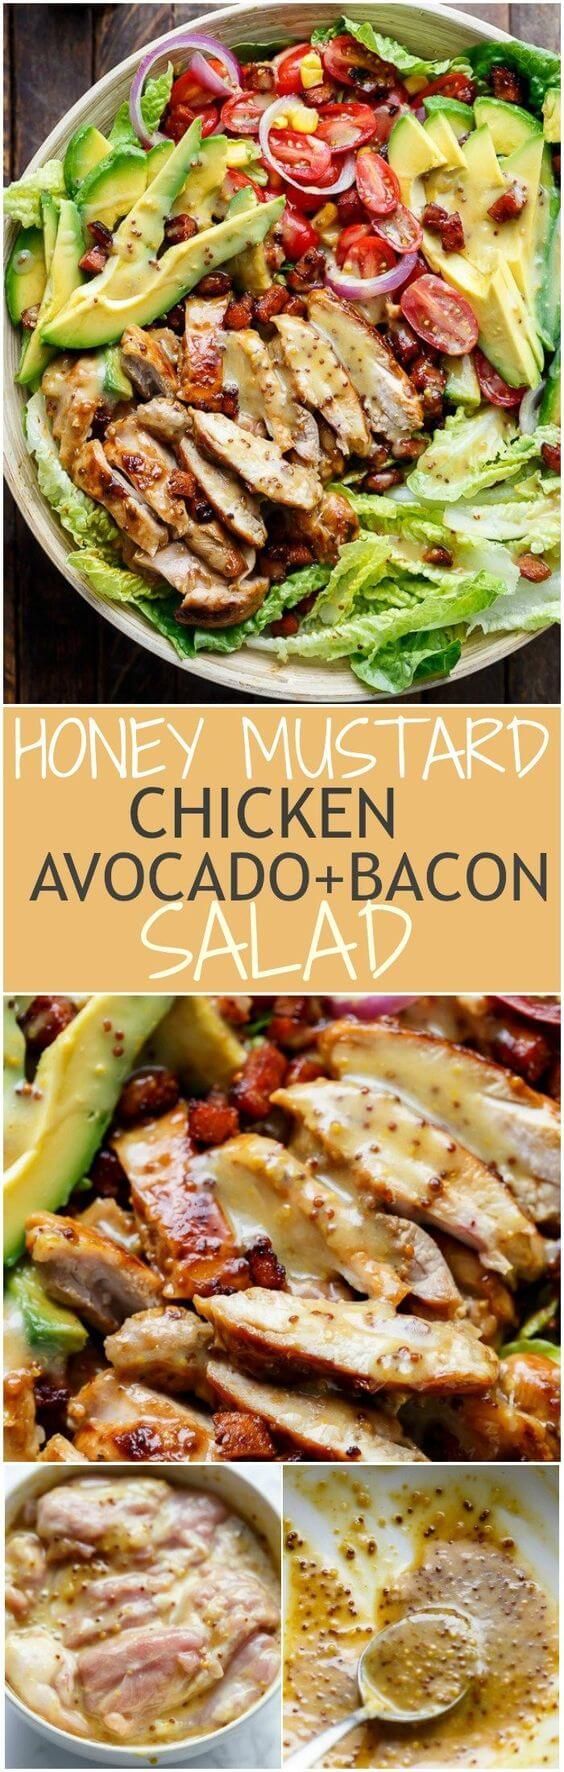 Clean Eating Honey Mustard Chicken, Avocado and Bacon Salad Recipe